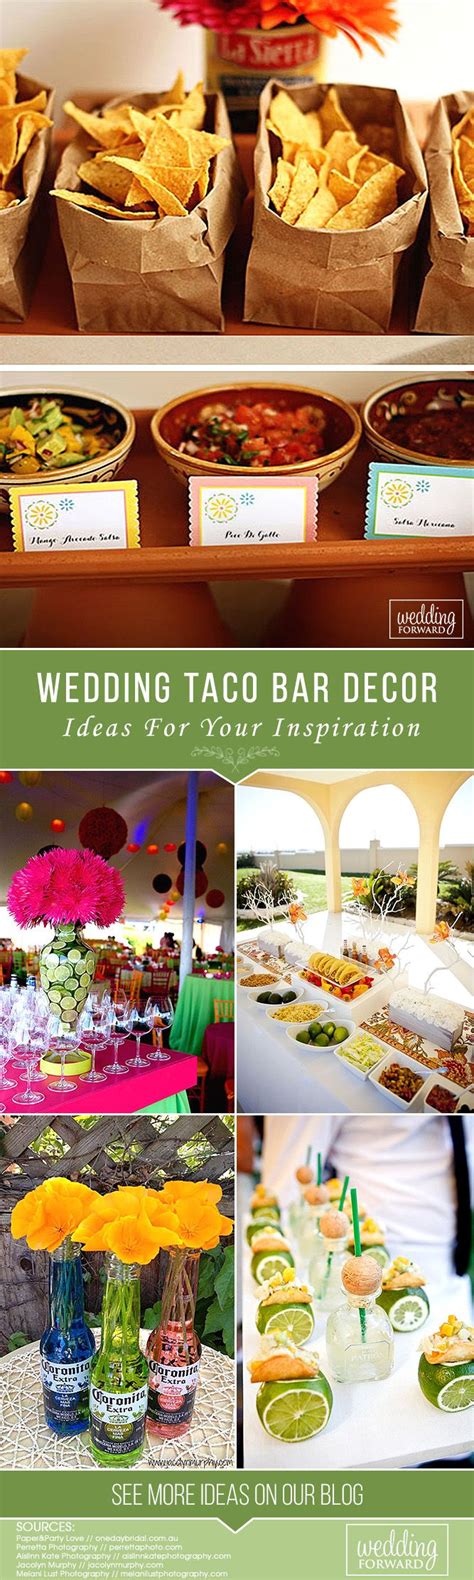 How To Decorate Wedding Taco Bar Wedding Forward Taco Bar Wedding